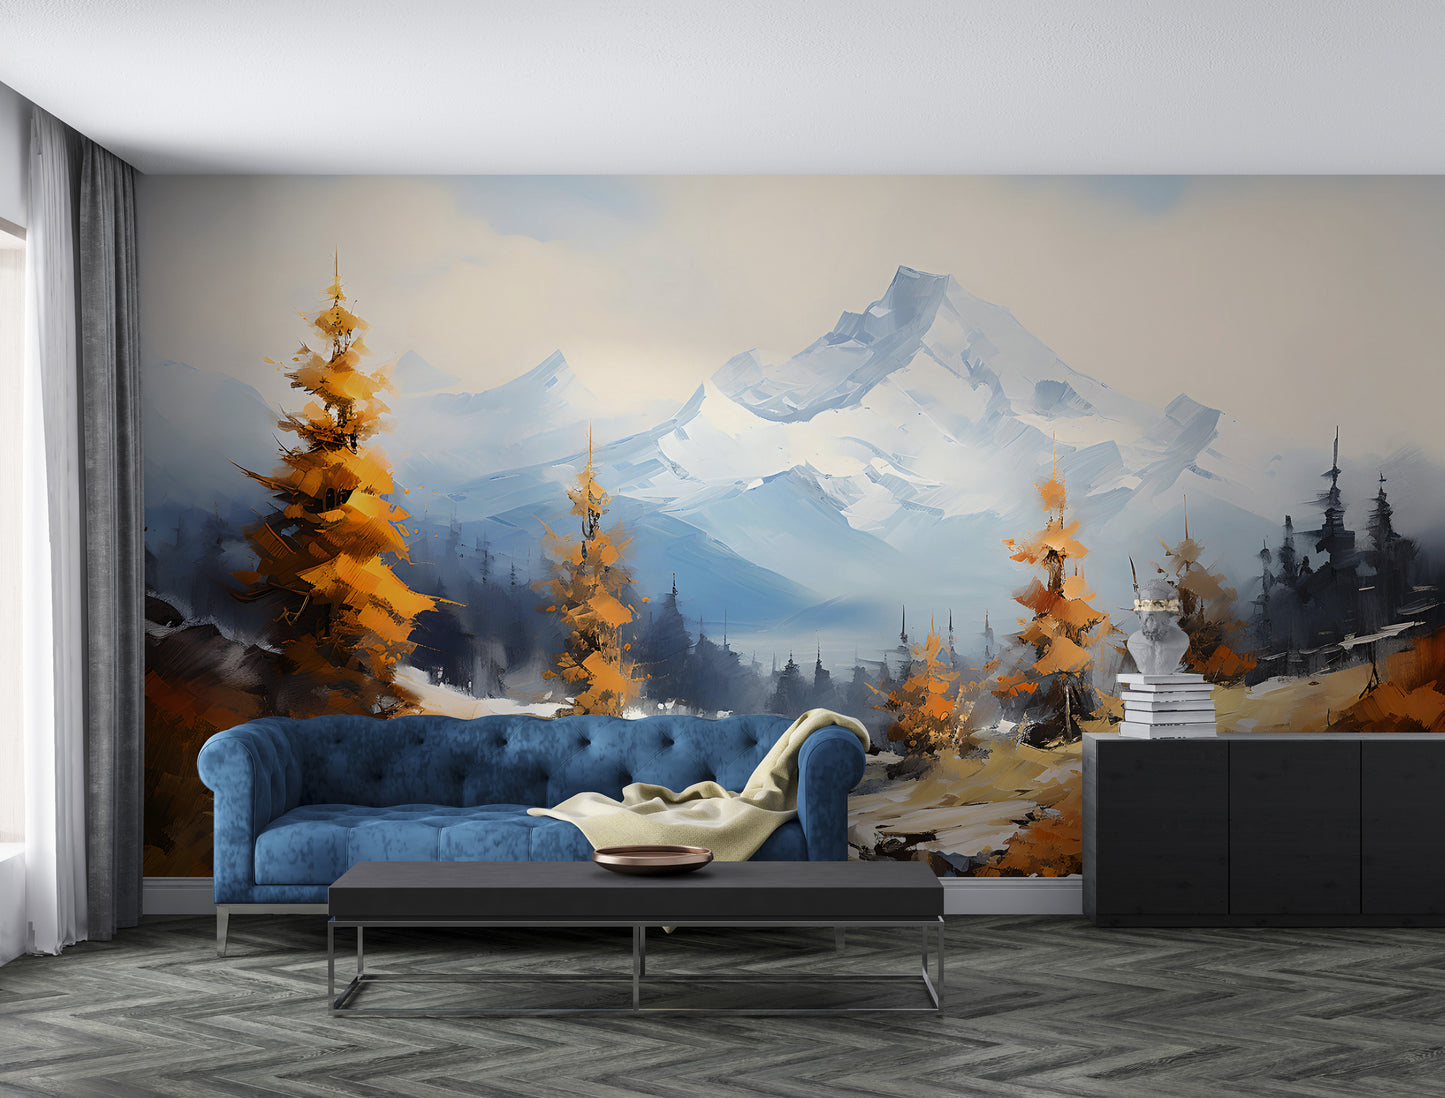 Timeless Mountain Landscape Mural